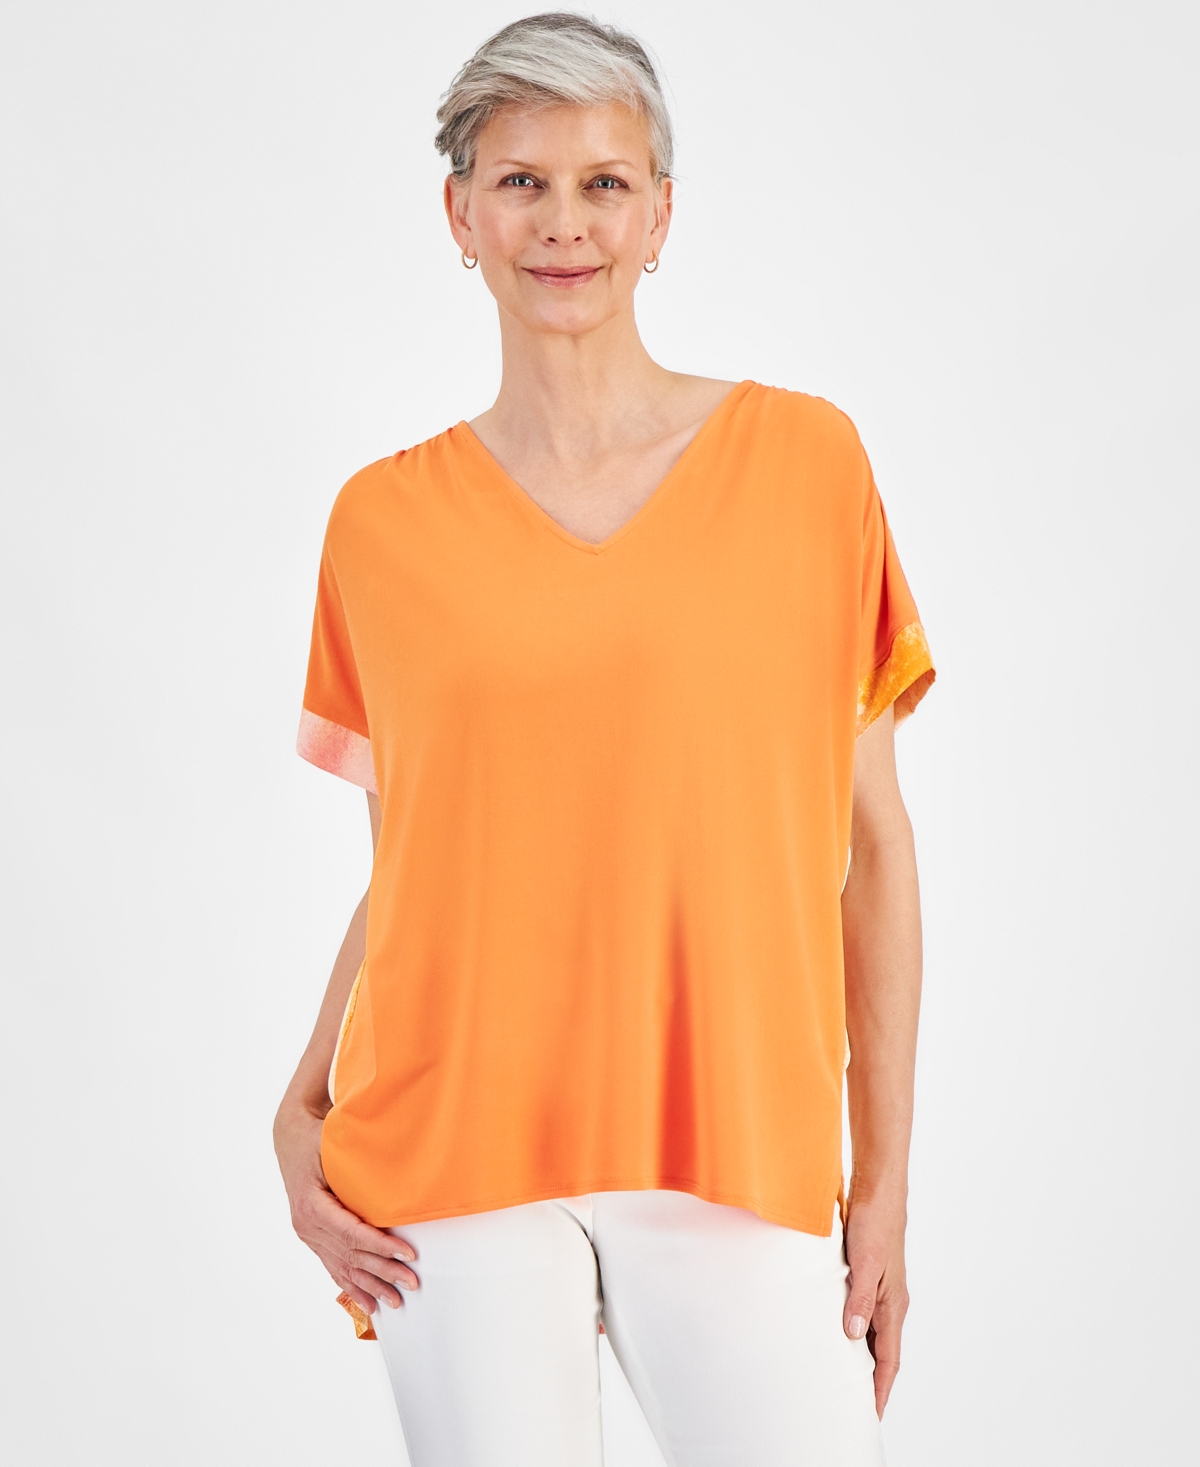 Women's Mixed-Media Short Sleeve Top, Created for Macy's - Cheerful Tan Combo